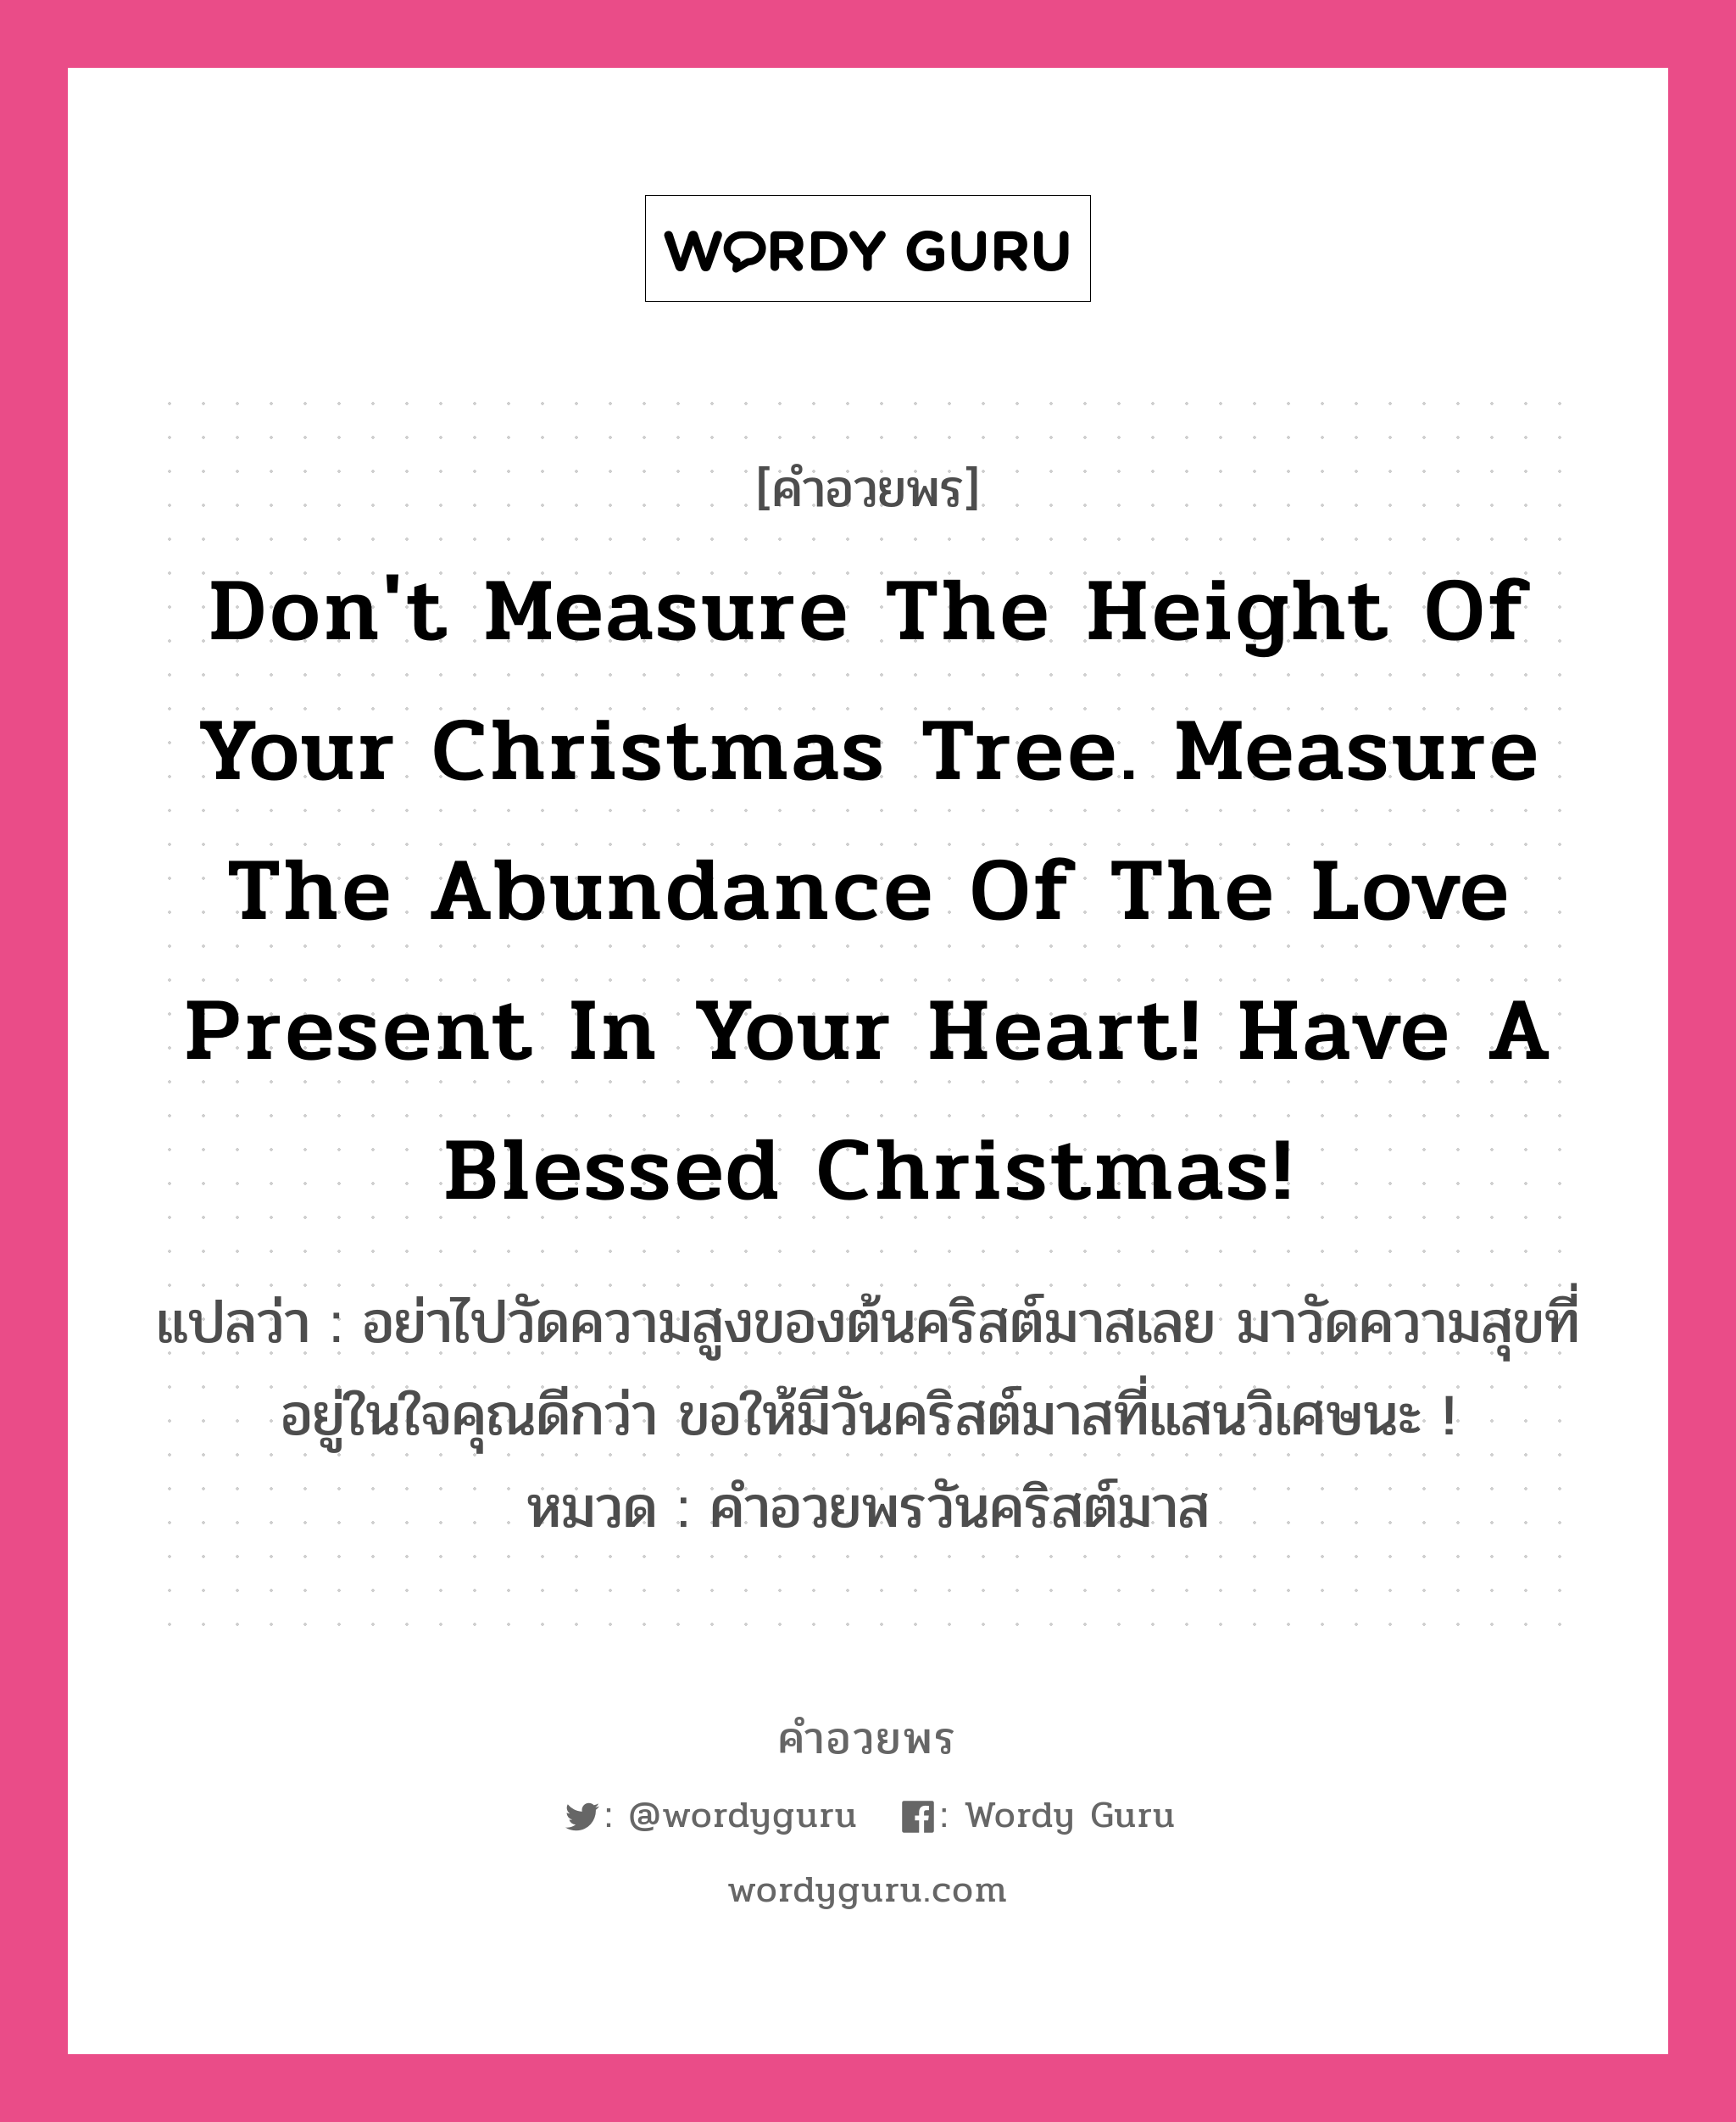 Don't measure the height of your Christmas tree. Measure the abundance of the love present in your heart! Have a Blessed Christmas! คำศัพท์ในกลุ่มประเภท คำอวยพรวันคริสต์มาส, แปลว่า อย่าไปวัดความสูงของต้นคริสต์มาสเลย มาวัดความสุขที่อยู่ในใจคุณดีกว่า ขอให้มีวันคริสต์มาสที่แสนวิเศษนะ ! หมวด คำอวยพรวันคริสต์มาส หมวด คำอวยพรวันคริสต์มาส